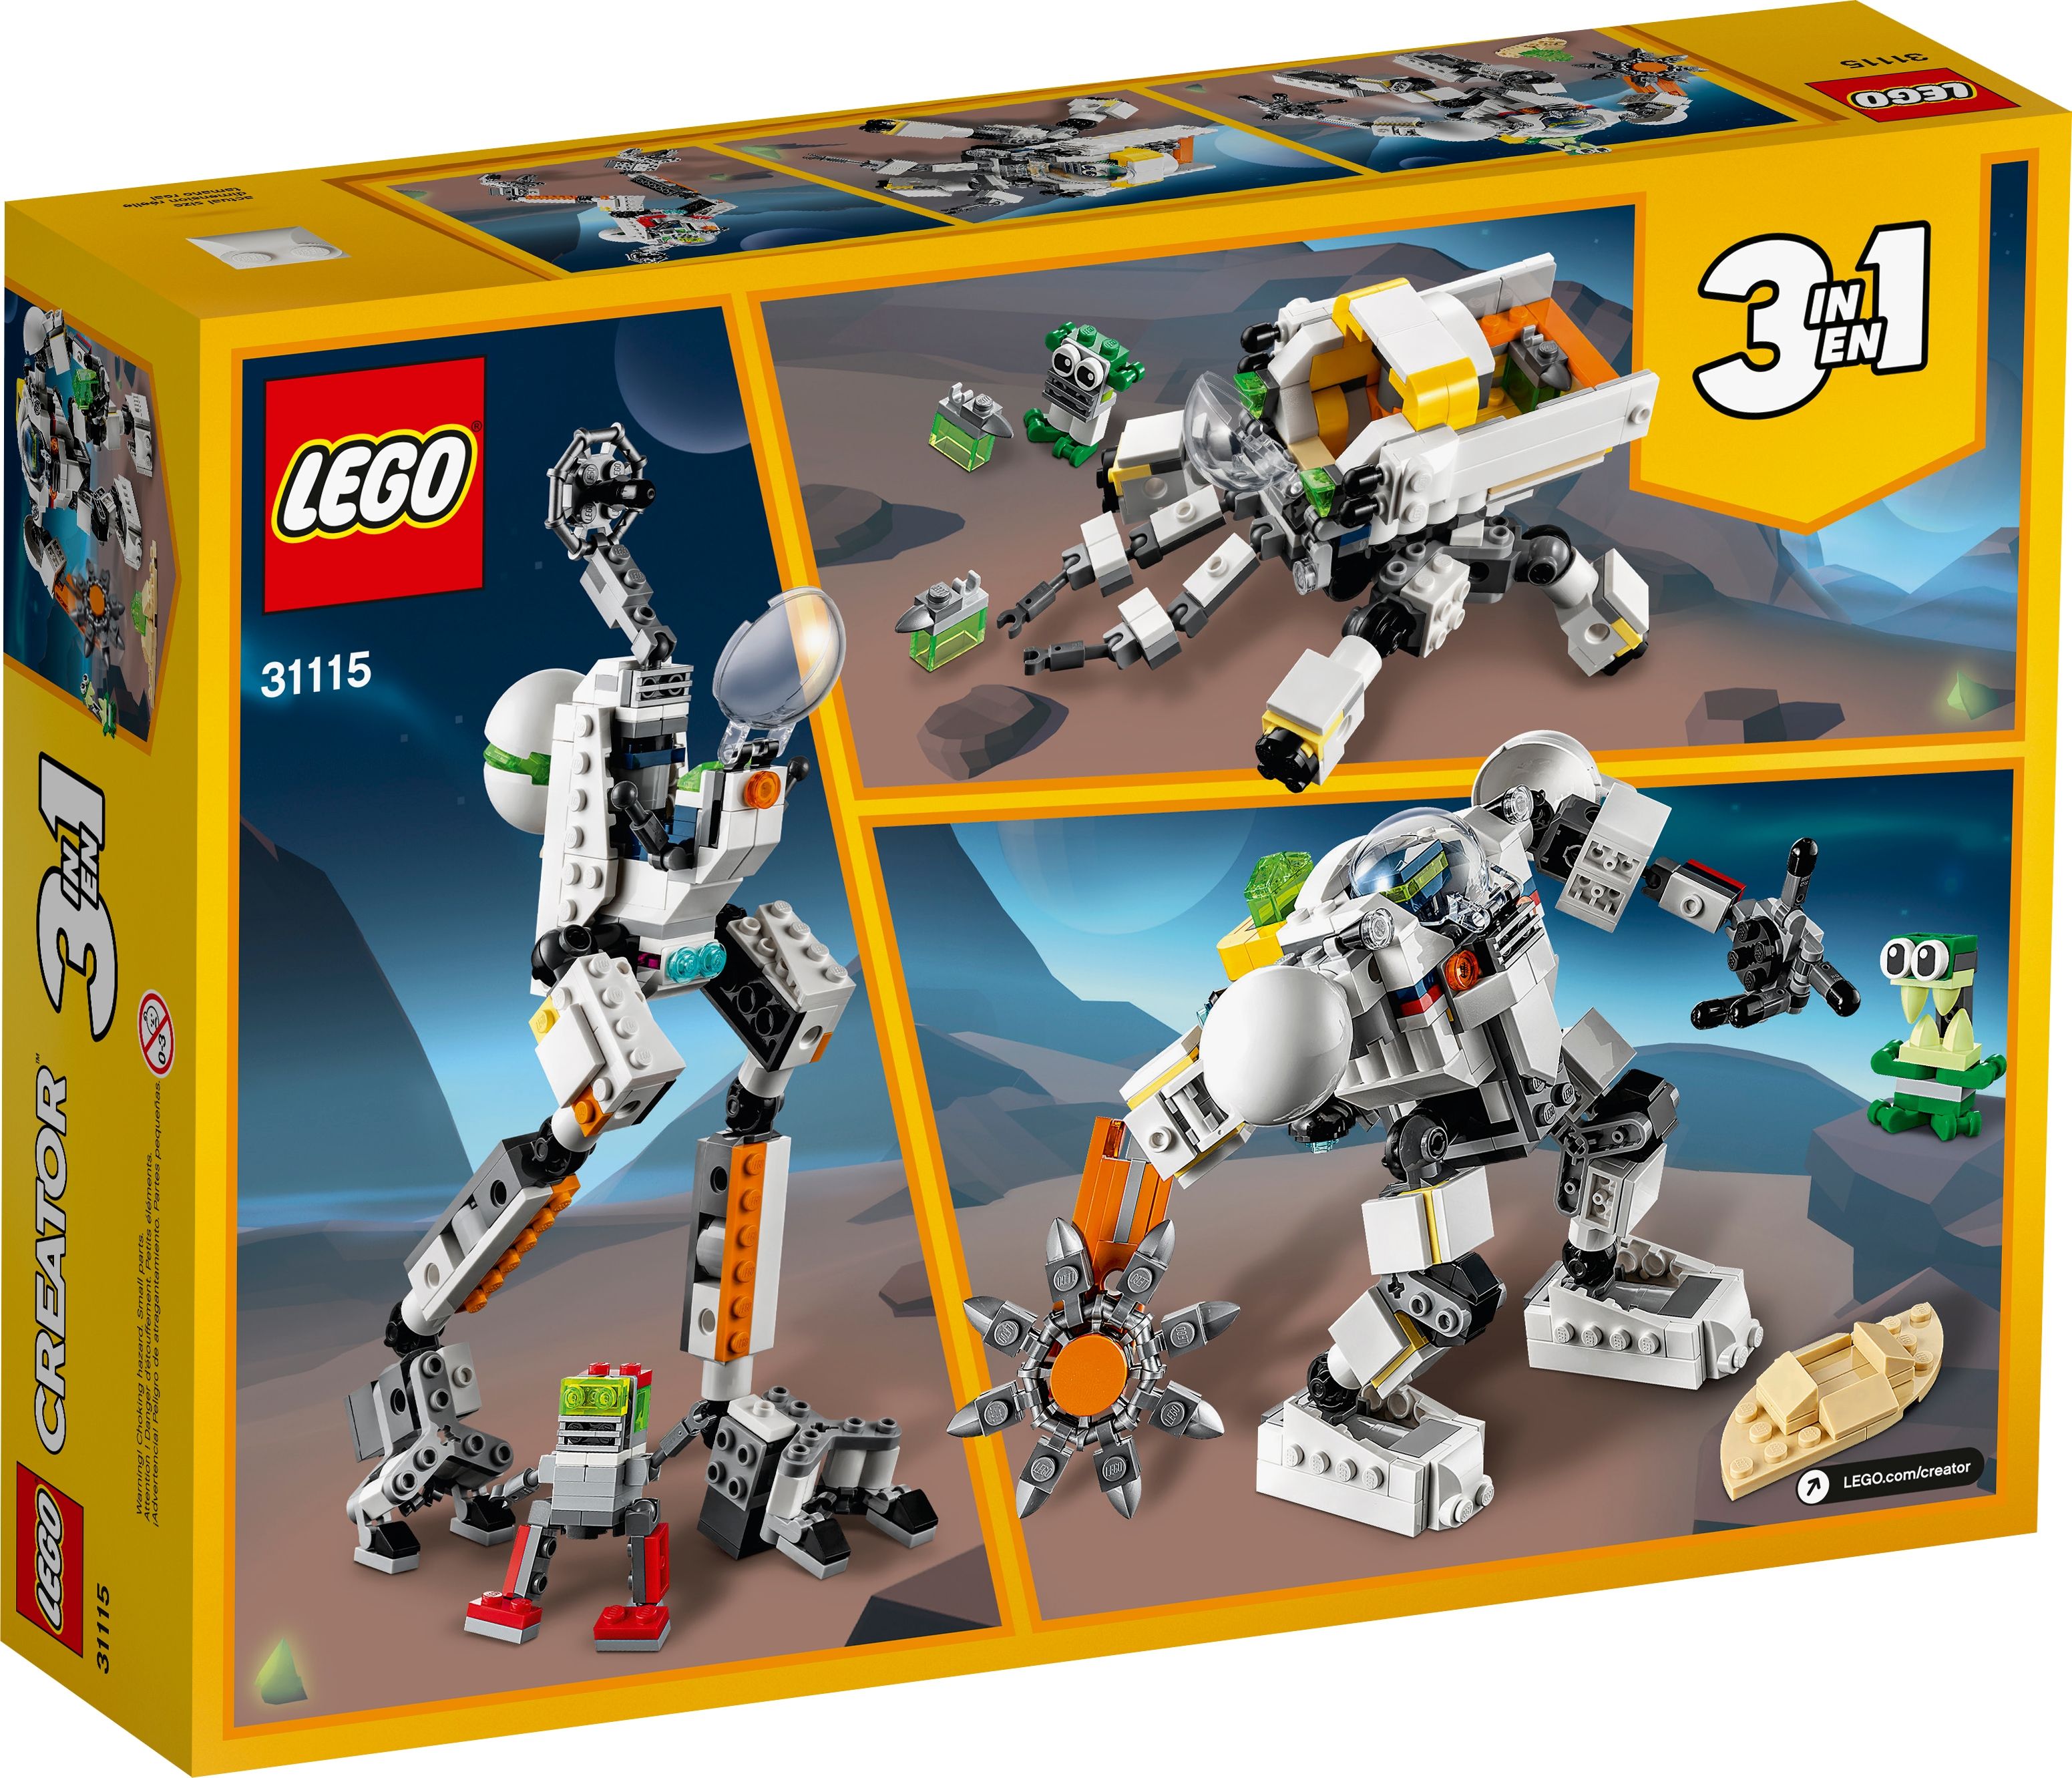 LEGO Creator 31115 Weltraum-Mech LEGO_31115_alt11.jpg